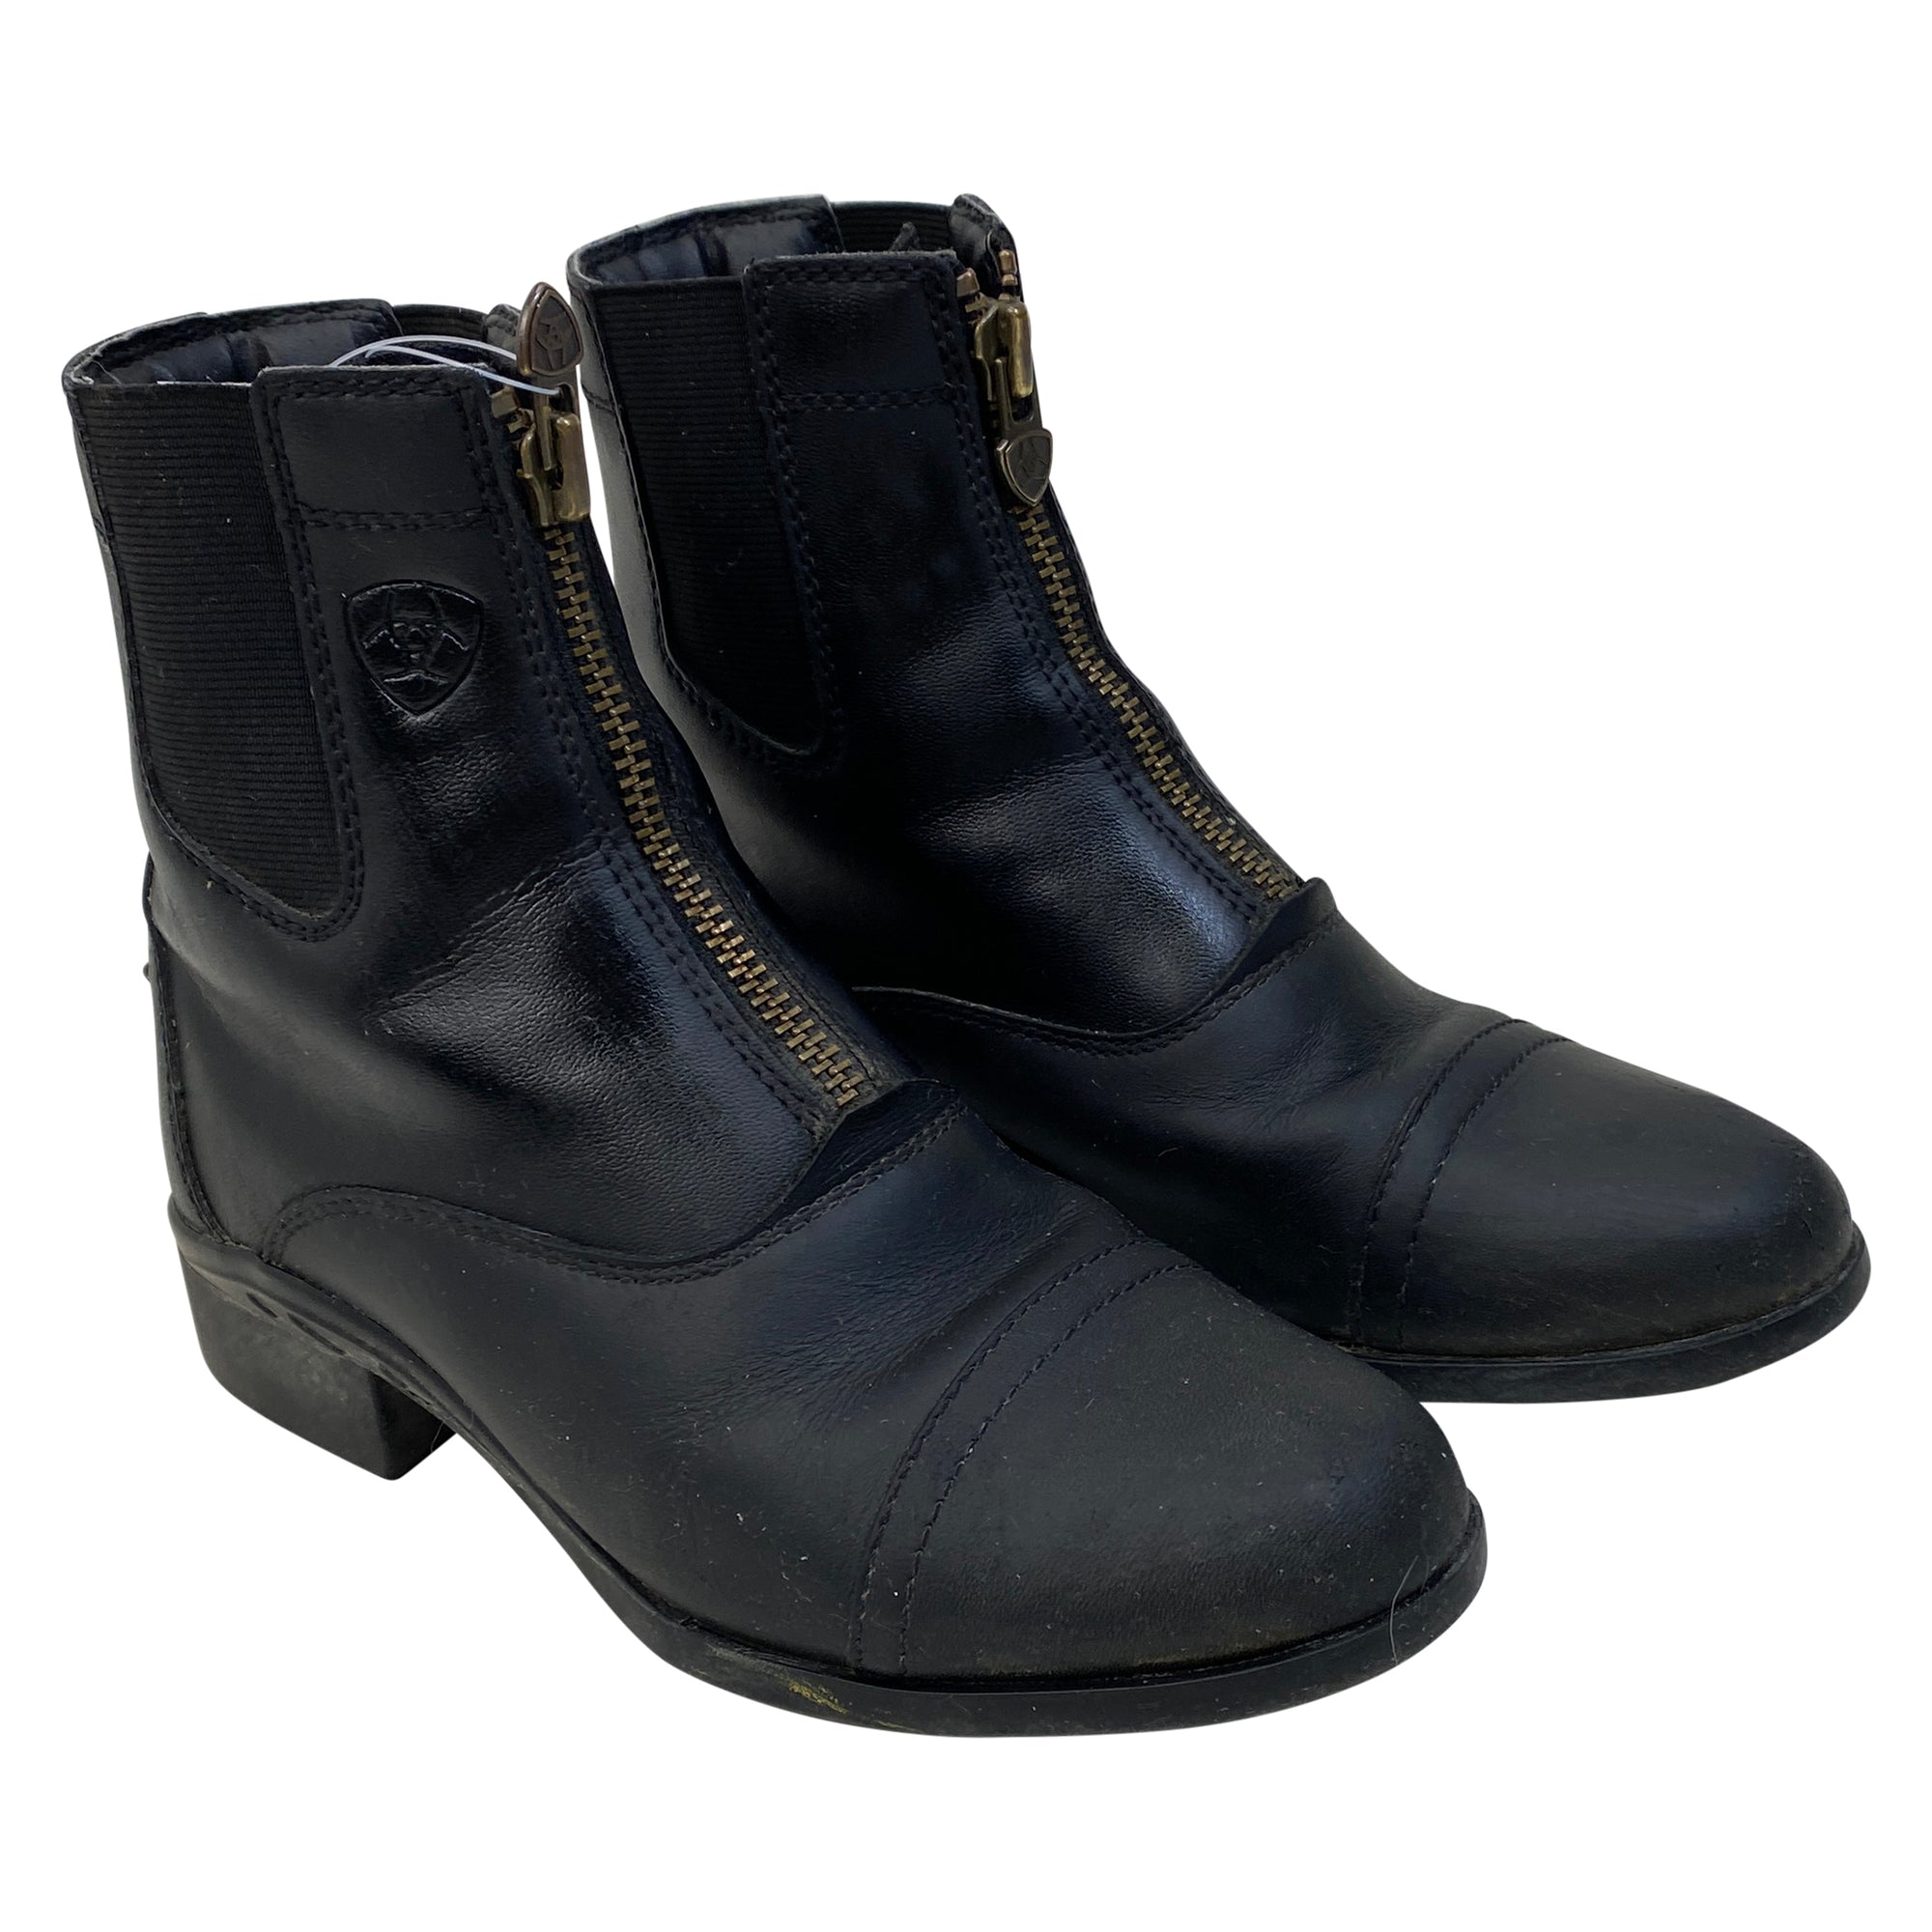 Ariat 'Scout Zip' Paddock Boots in Black